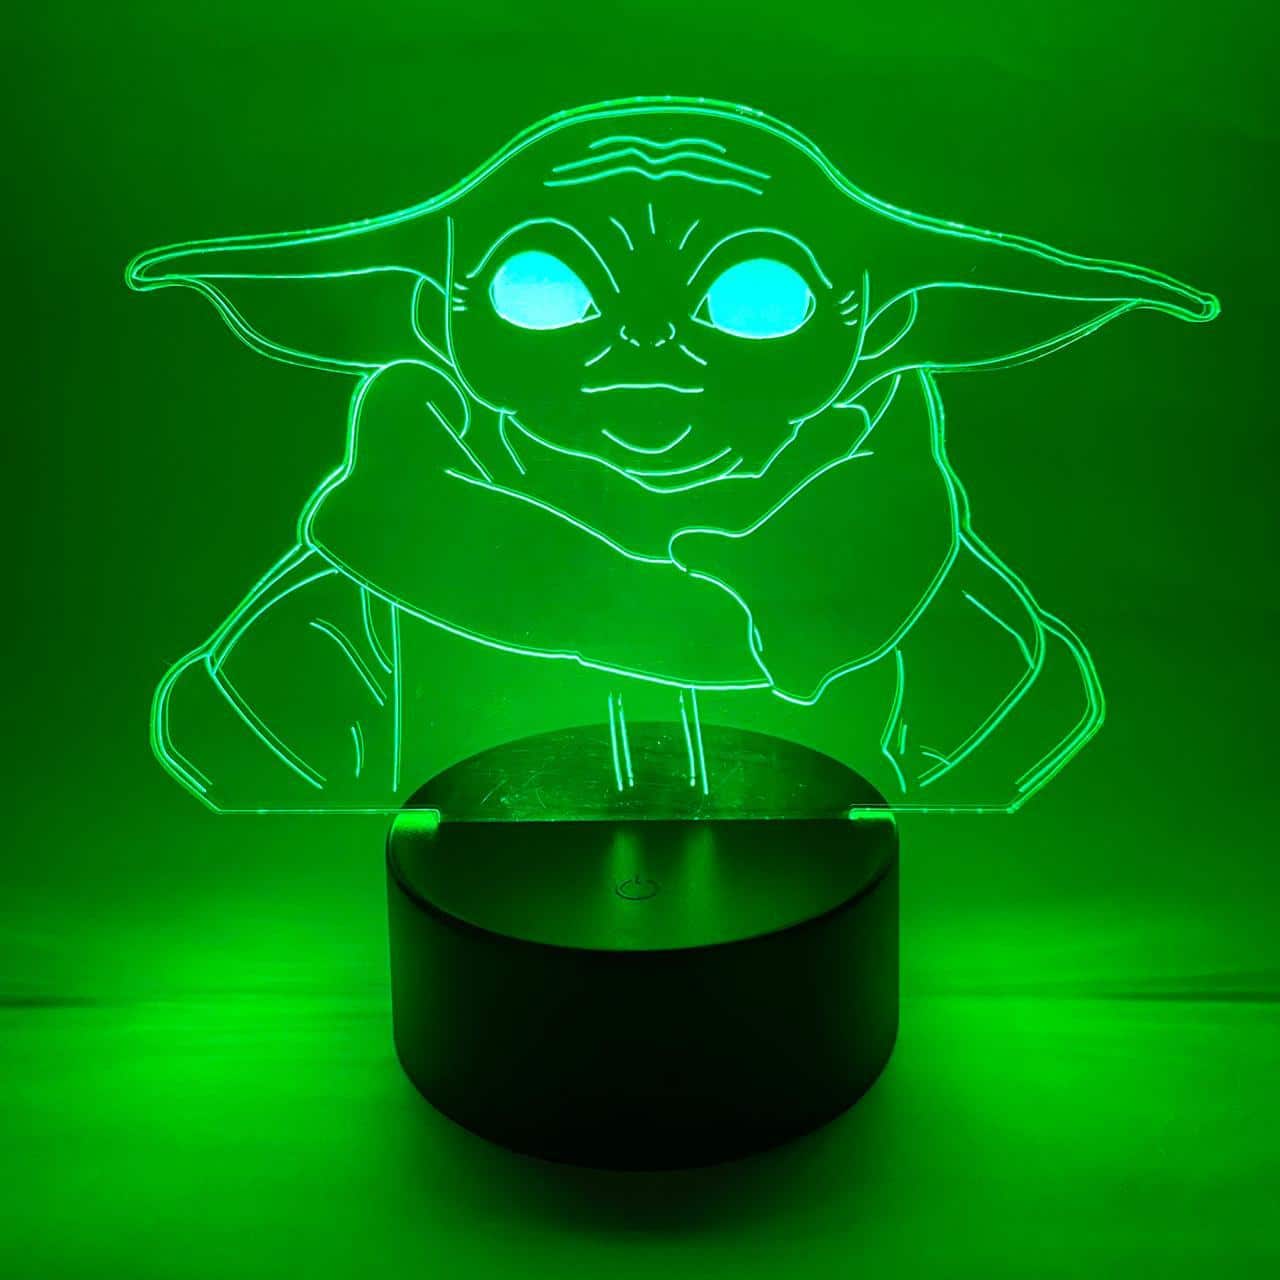 Lámpara Yoda